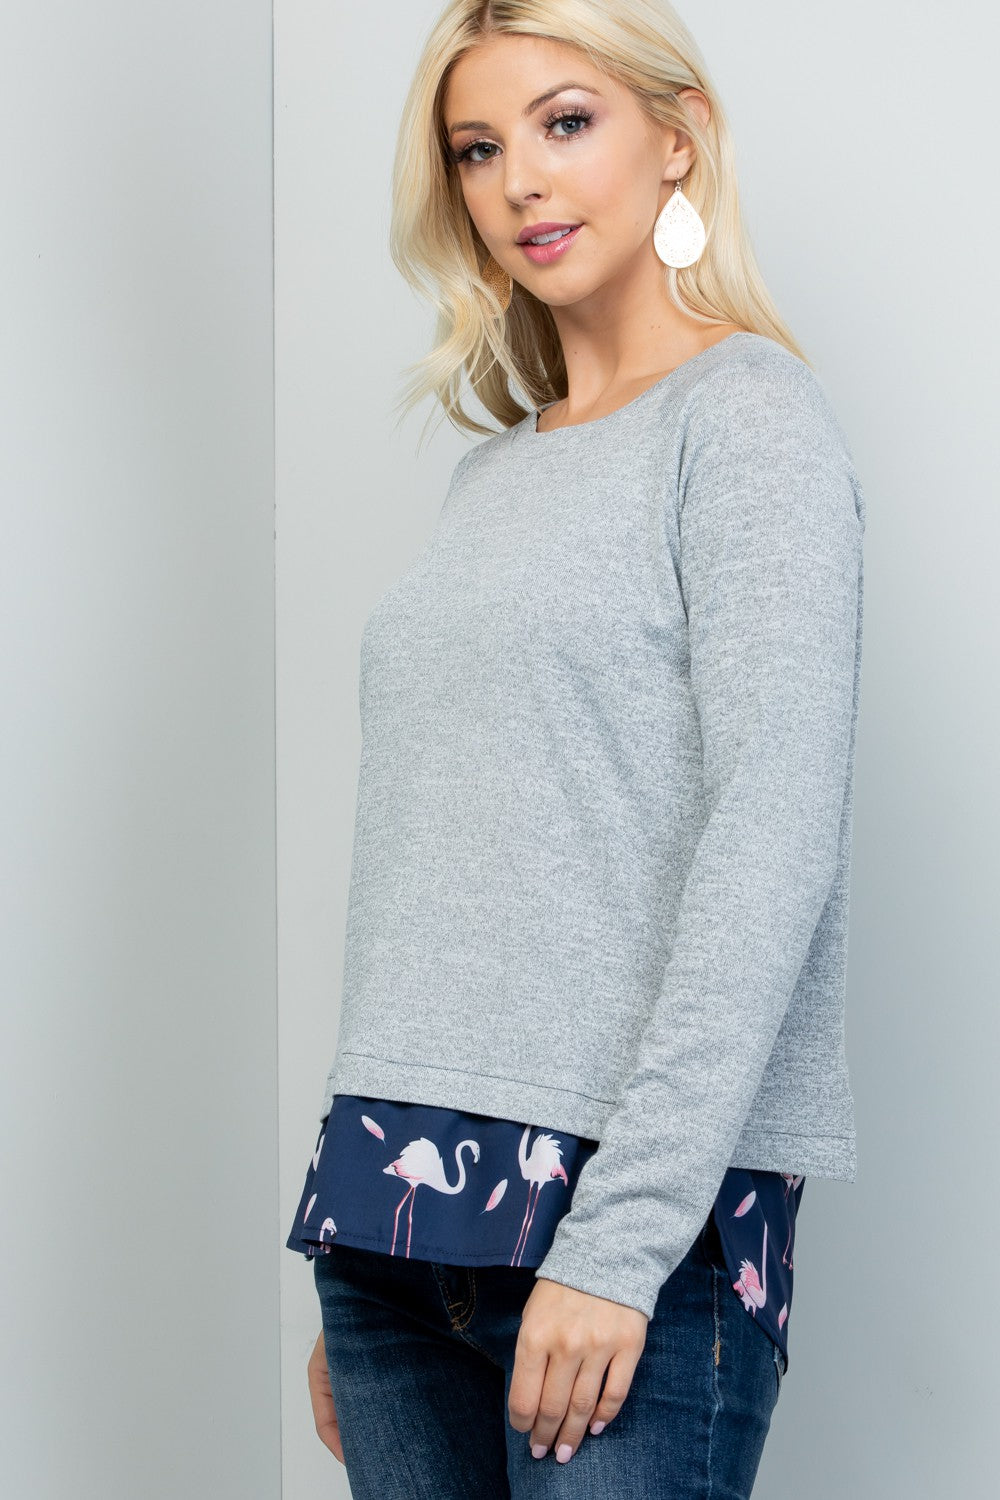 Flamingo Print Sweater Top